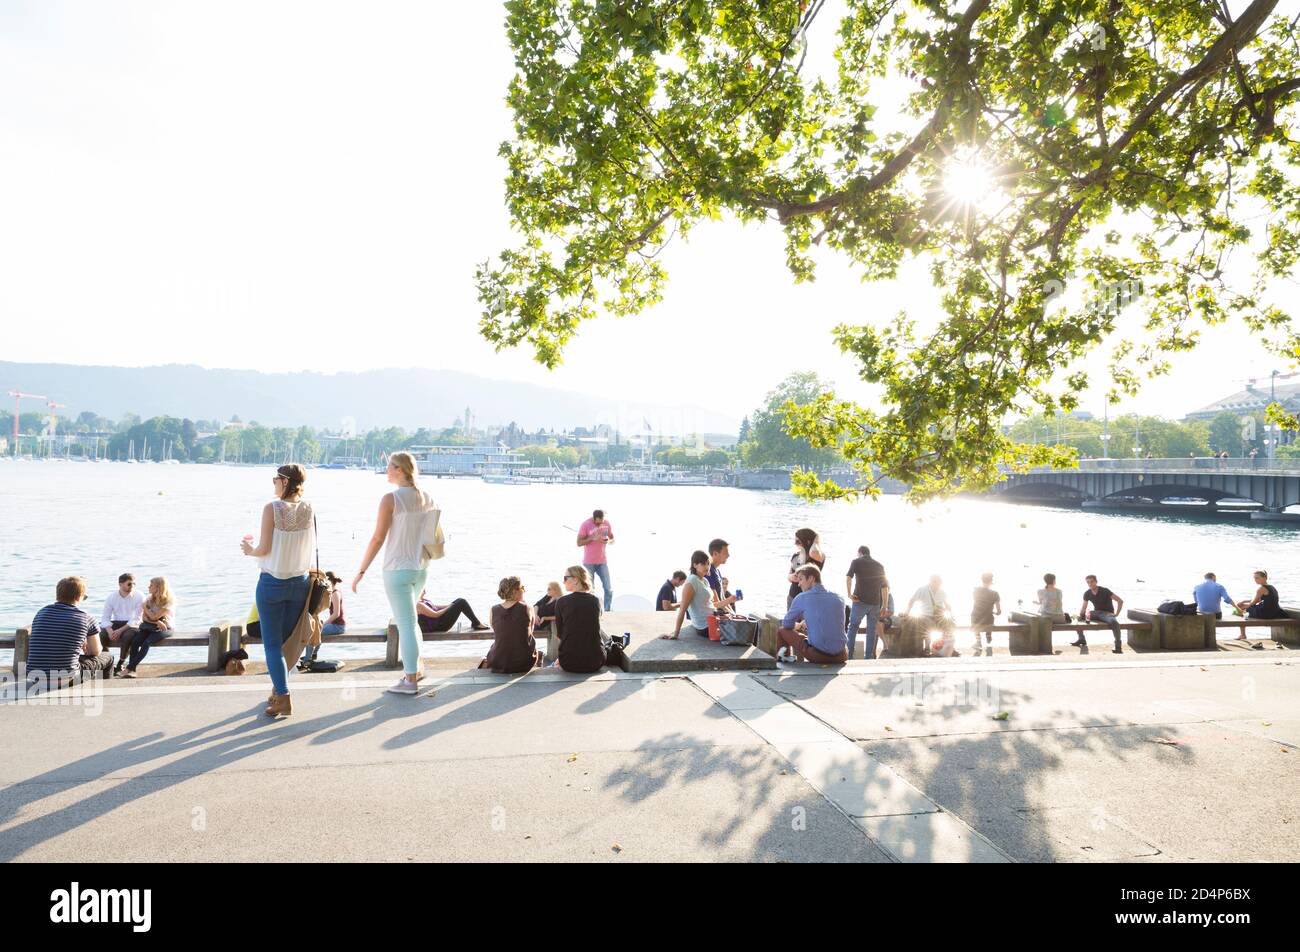 Zurich, Switzerland - July 17, 2014: People socializing on the bank of Zurich lake in Switzerland Stock Photo